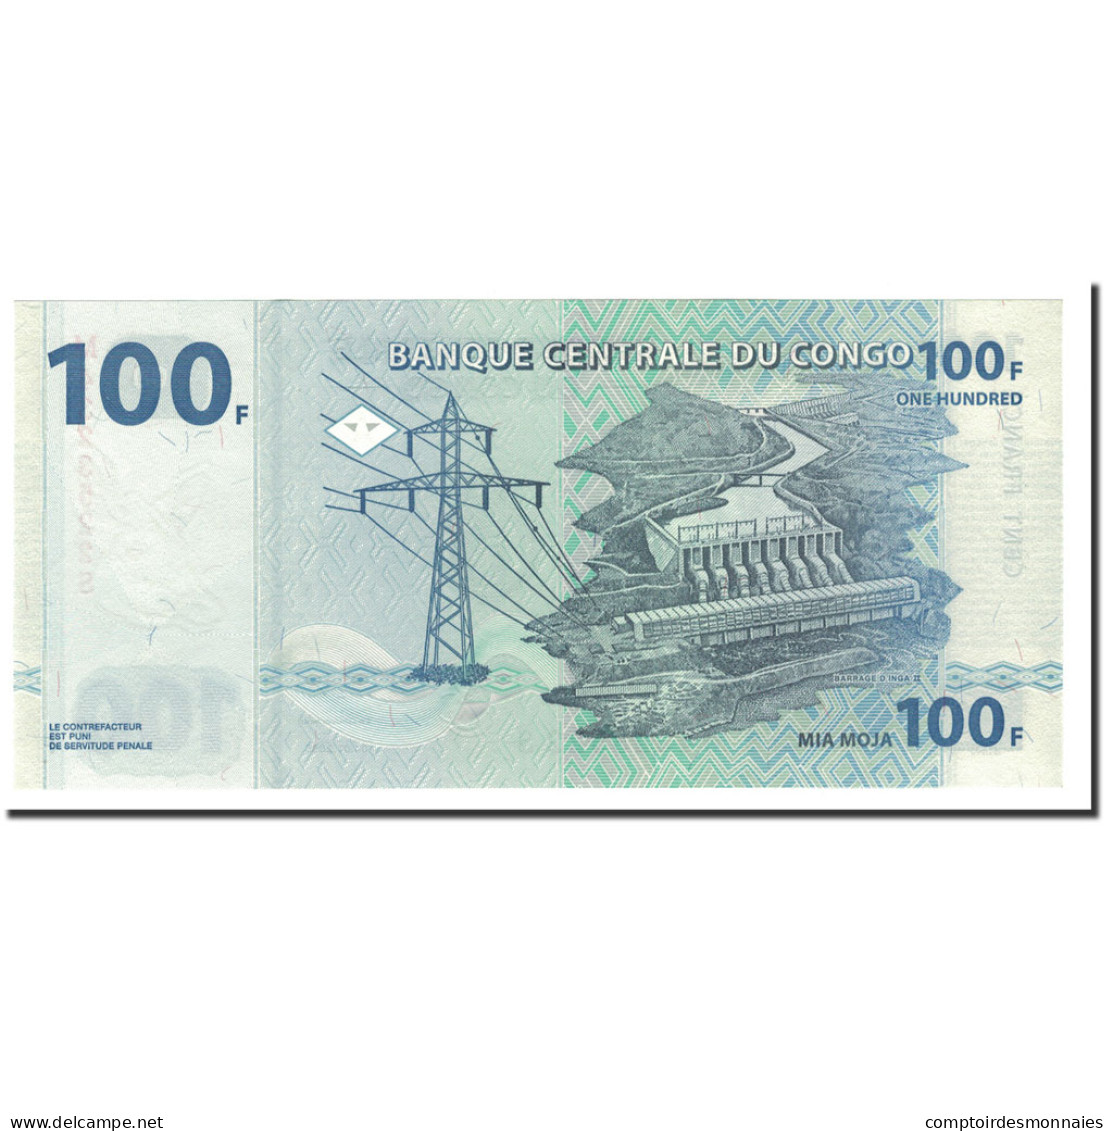 Billet, Congo Democratic Republic, 100 Francs, 2000, 2000-01-04, KM:92a, NEUF - Republic Of Congo (Congo-Brazzaville)